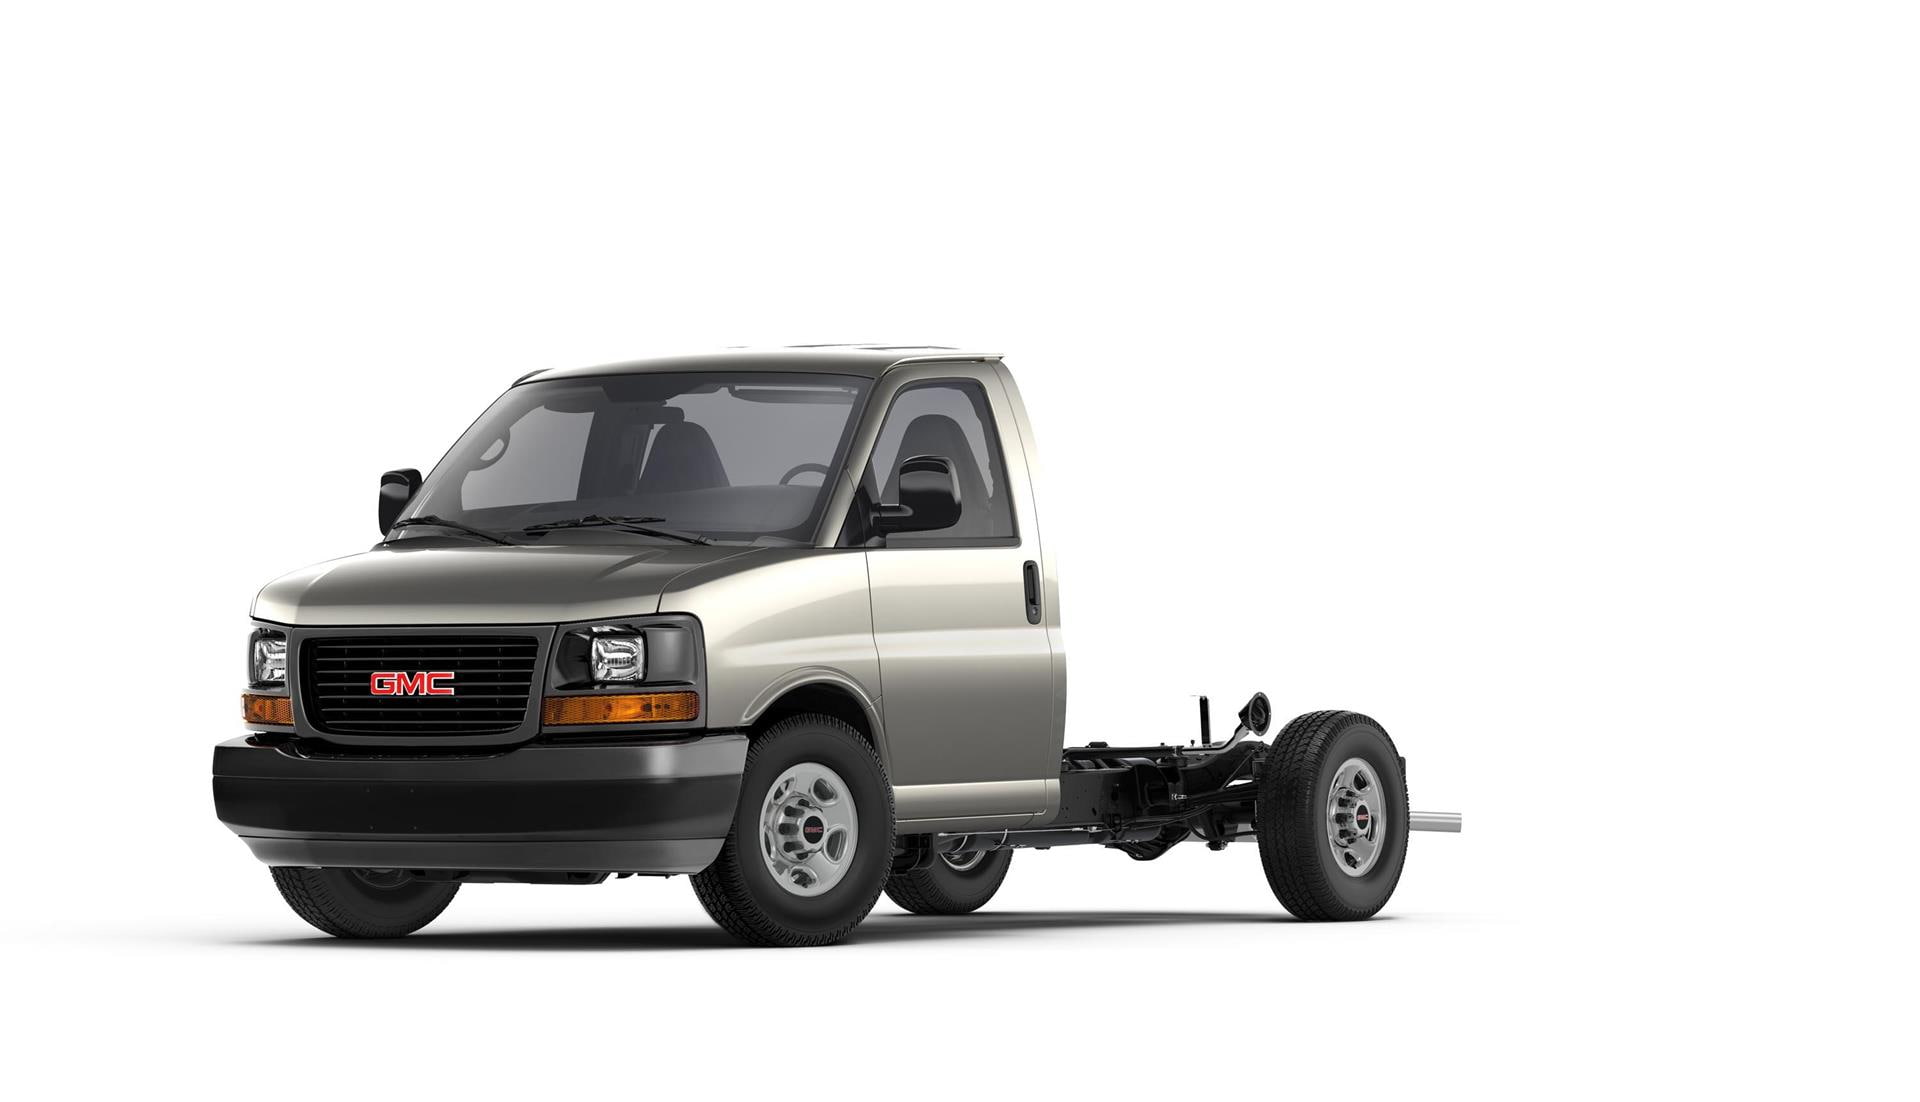 GMC Savana Cargo Van, 2016 gmc_savana cutaway van, mode of transportation